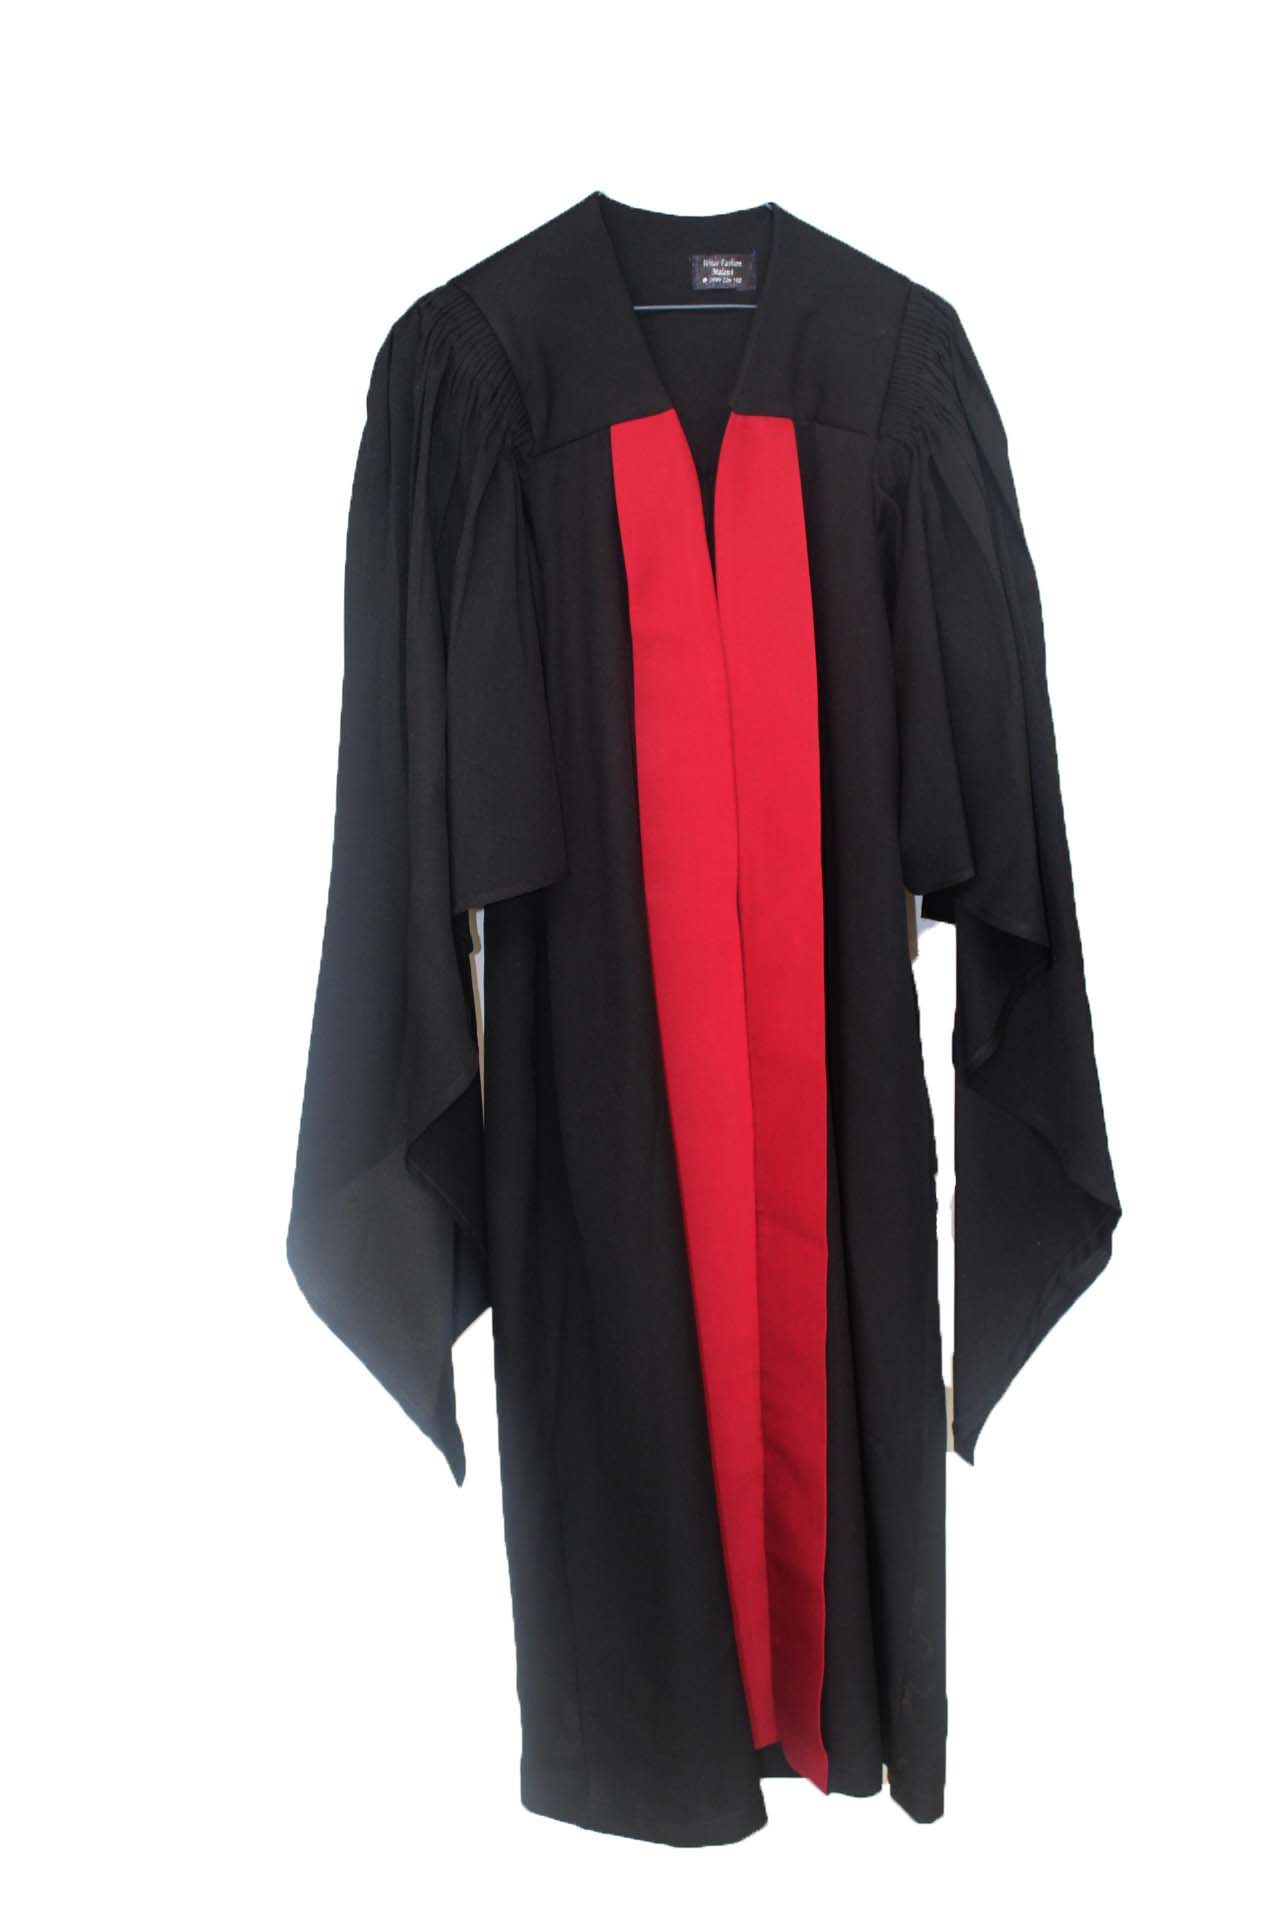 Under Graduate Gown